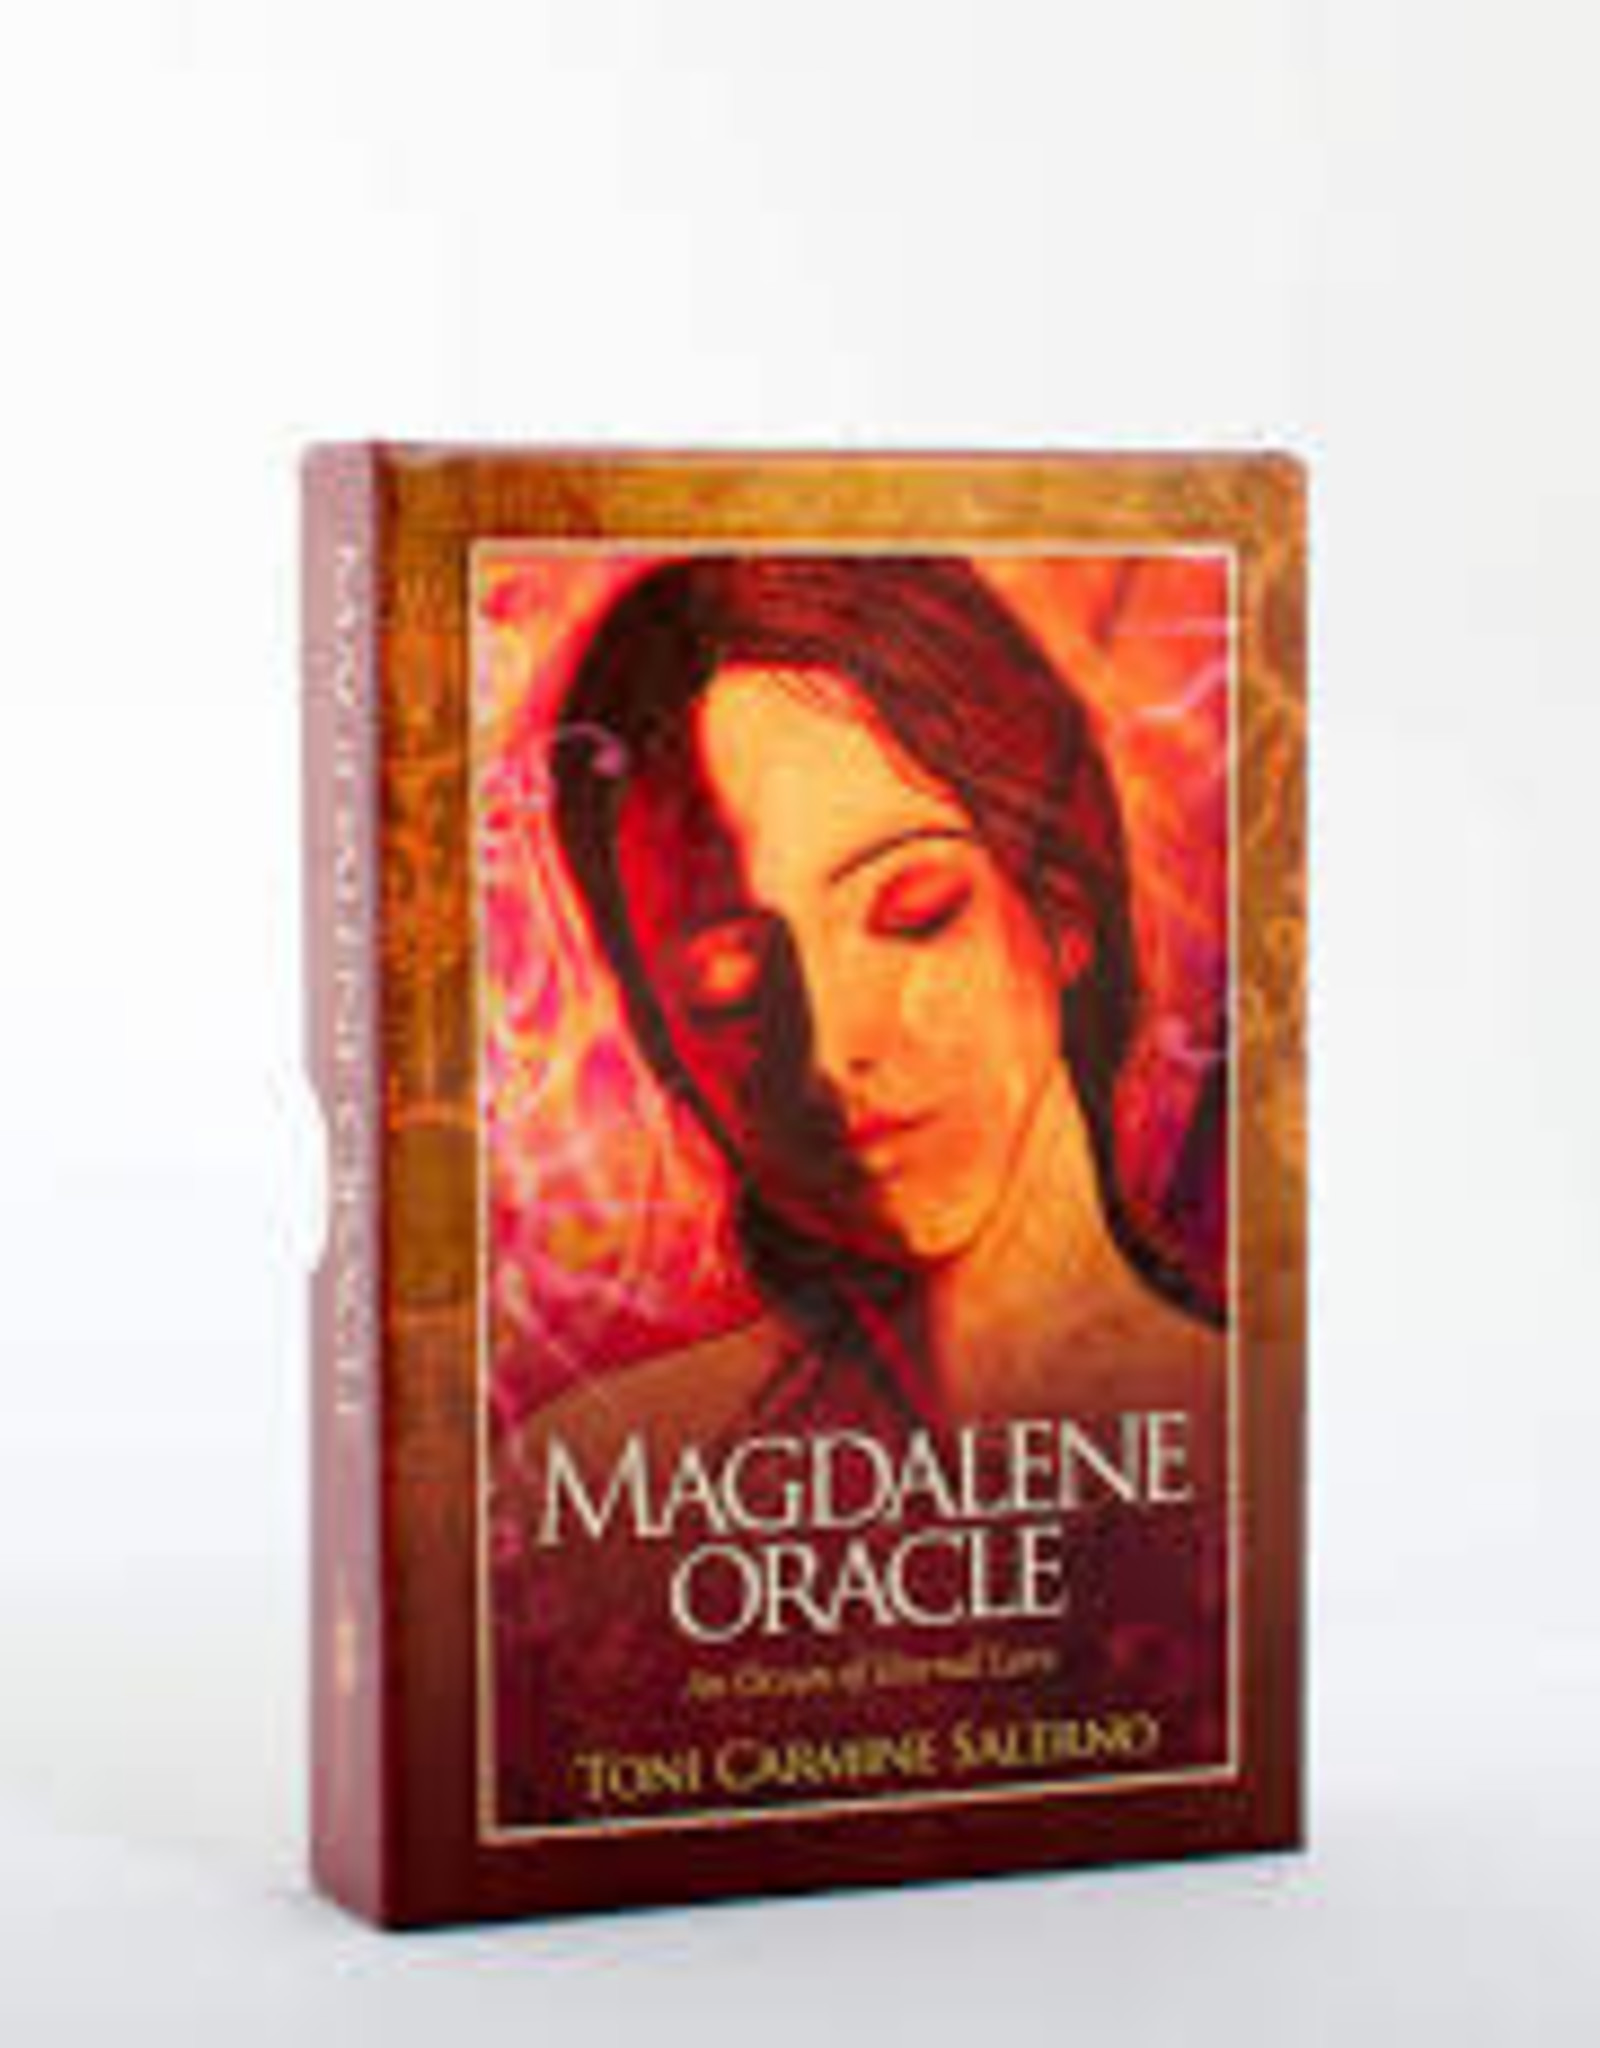 Toni Carmine Salerno Magdalene Oracle by Toni Carmine Salerno